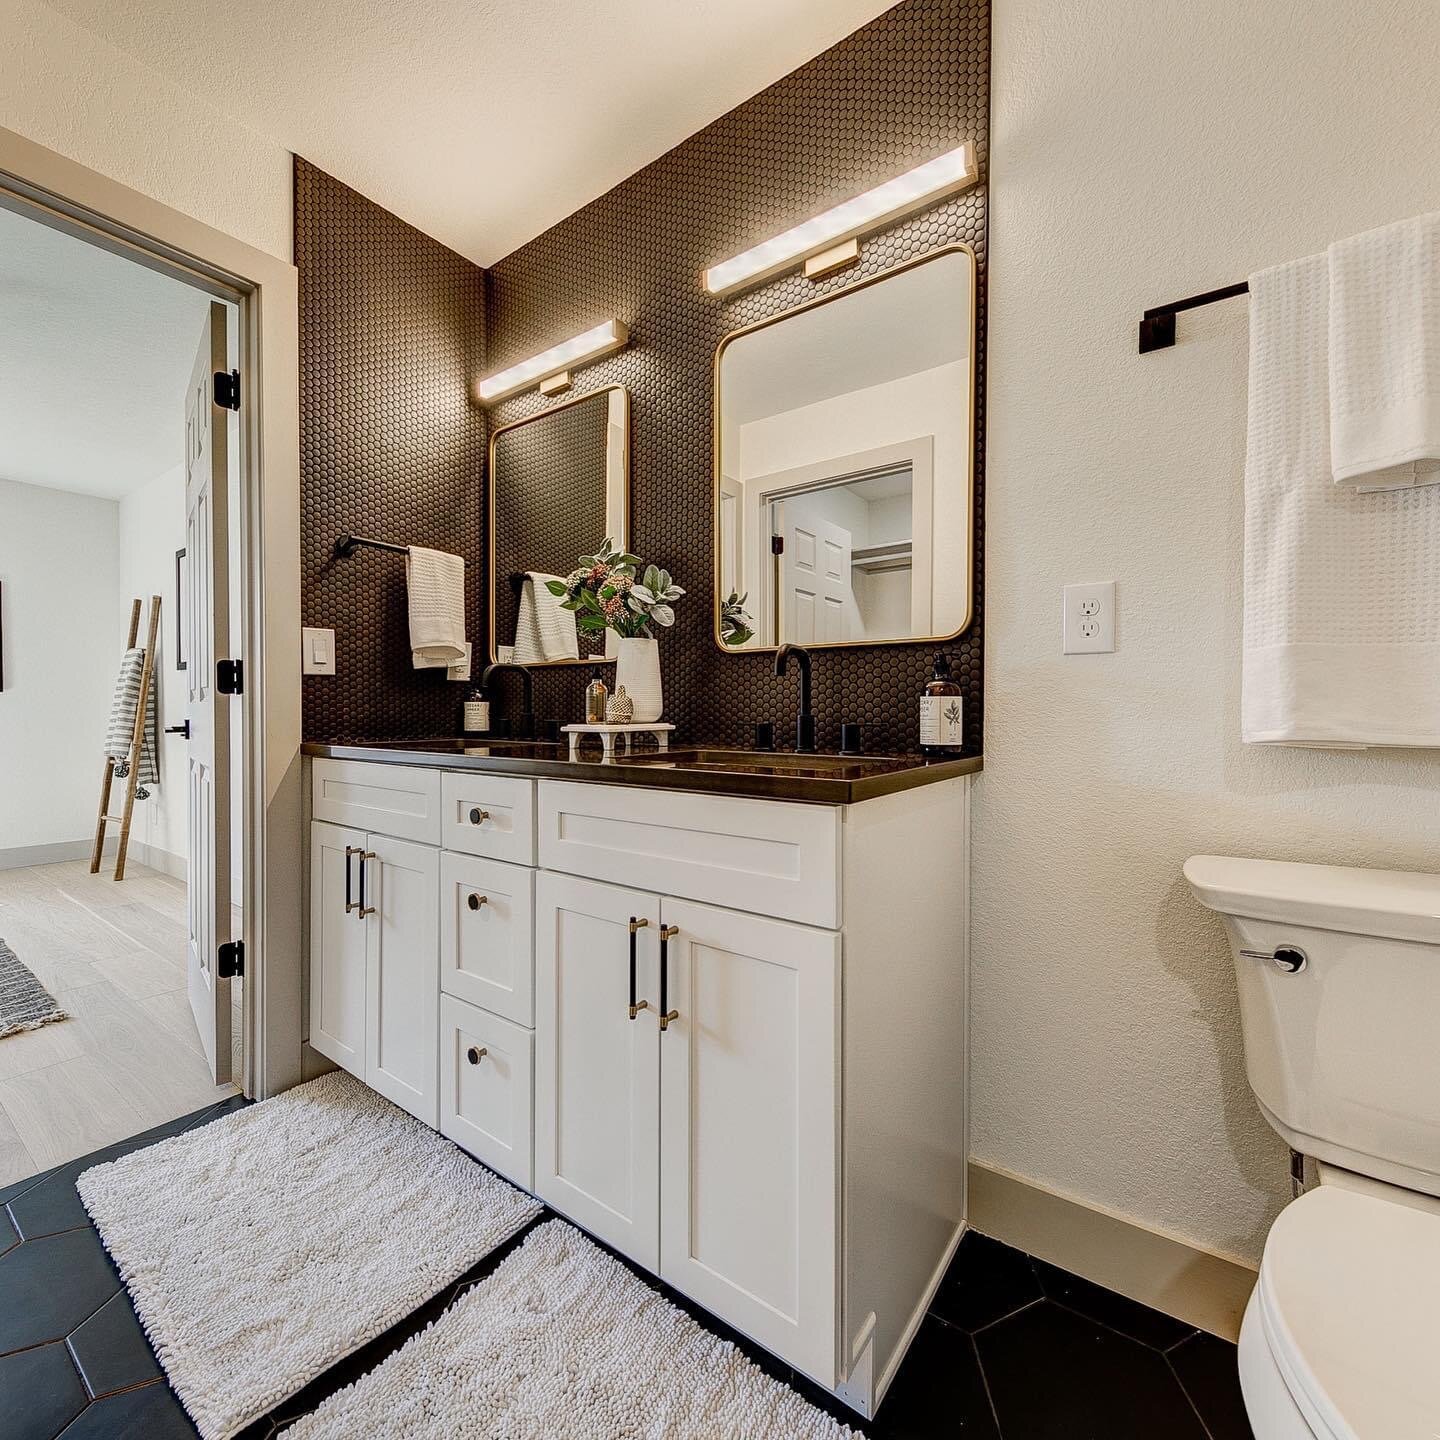 Double bathroom vanity with dark honeycomb tile